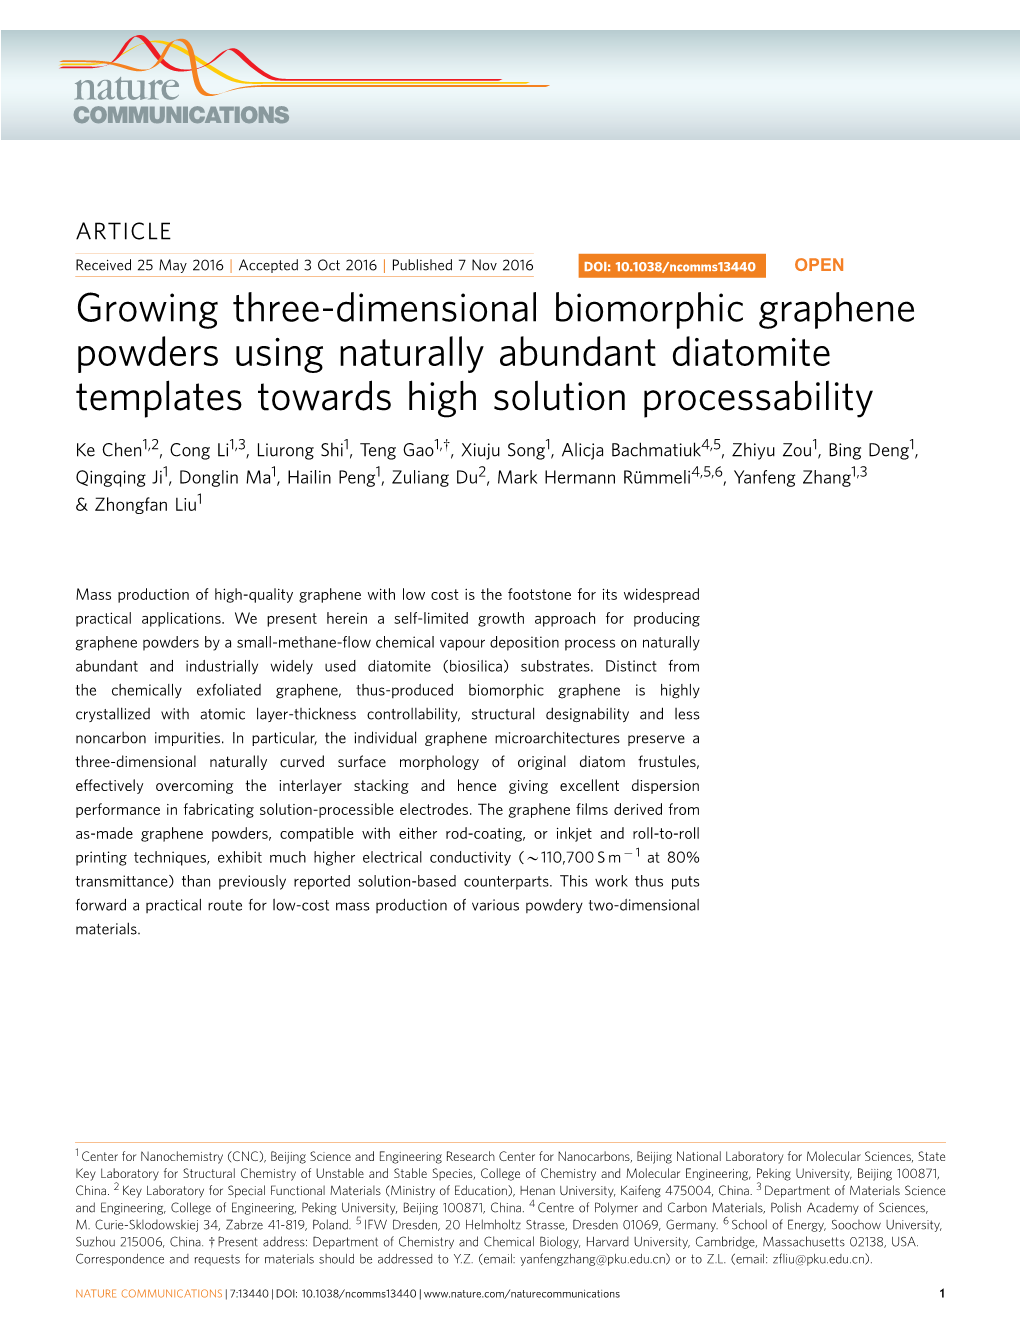 Growing Three-Dimensional Biomorphic Graphene Powders Using Naturally Abundant Diatomite Templates Towards High Solution Processability